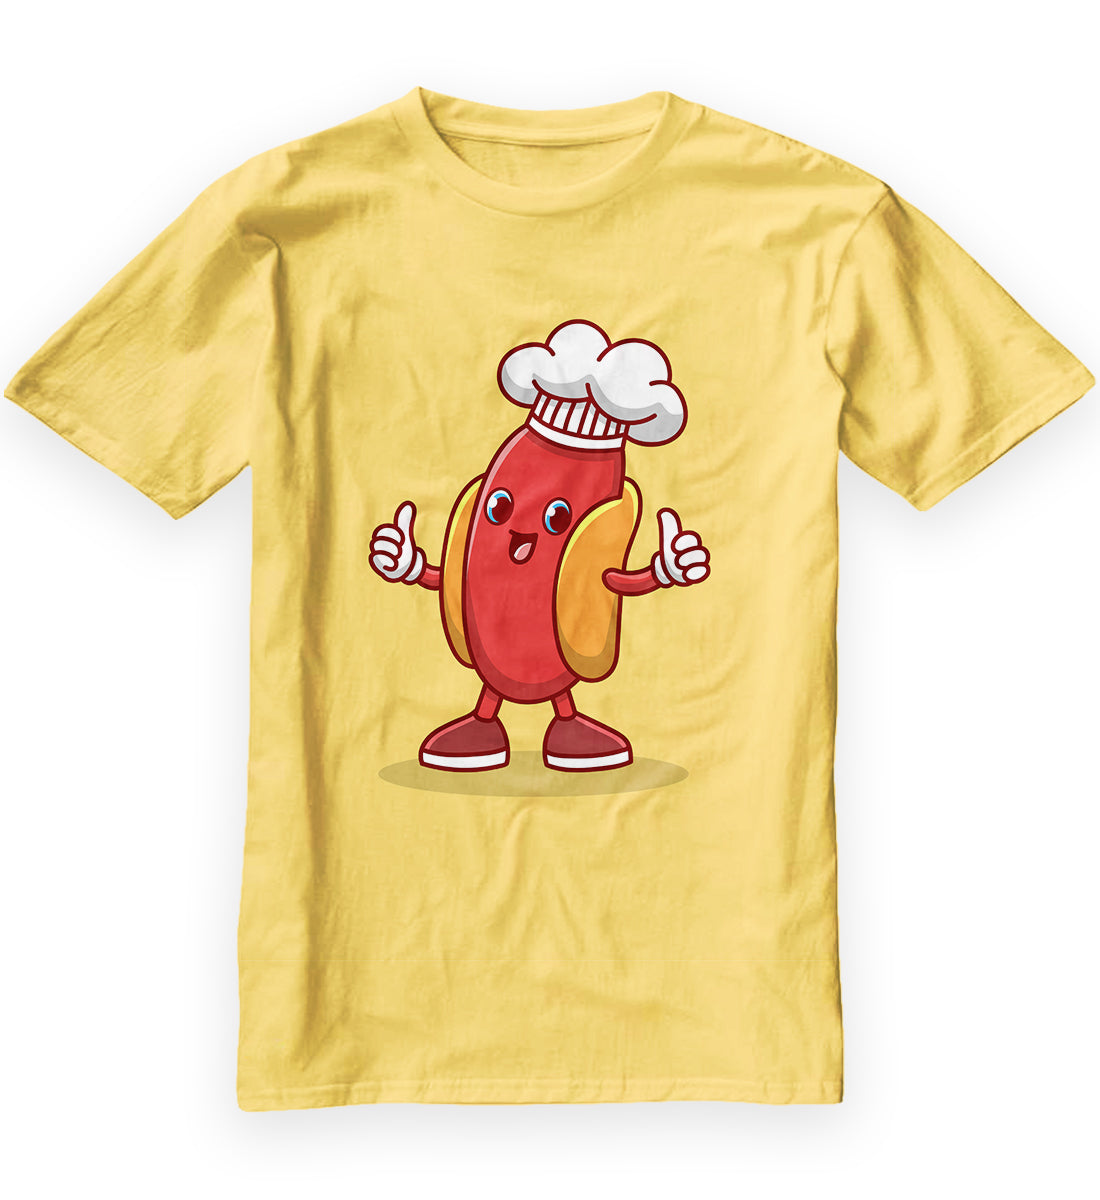 Hot Dog Chef Kid Shirt